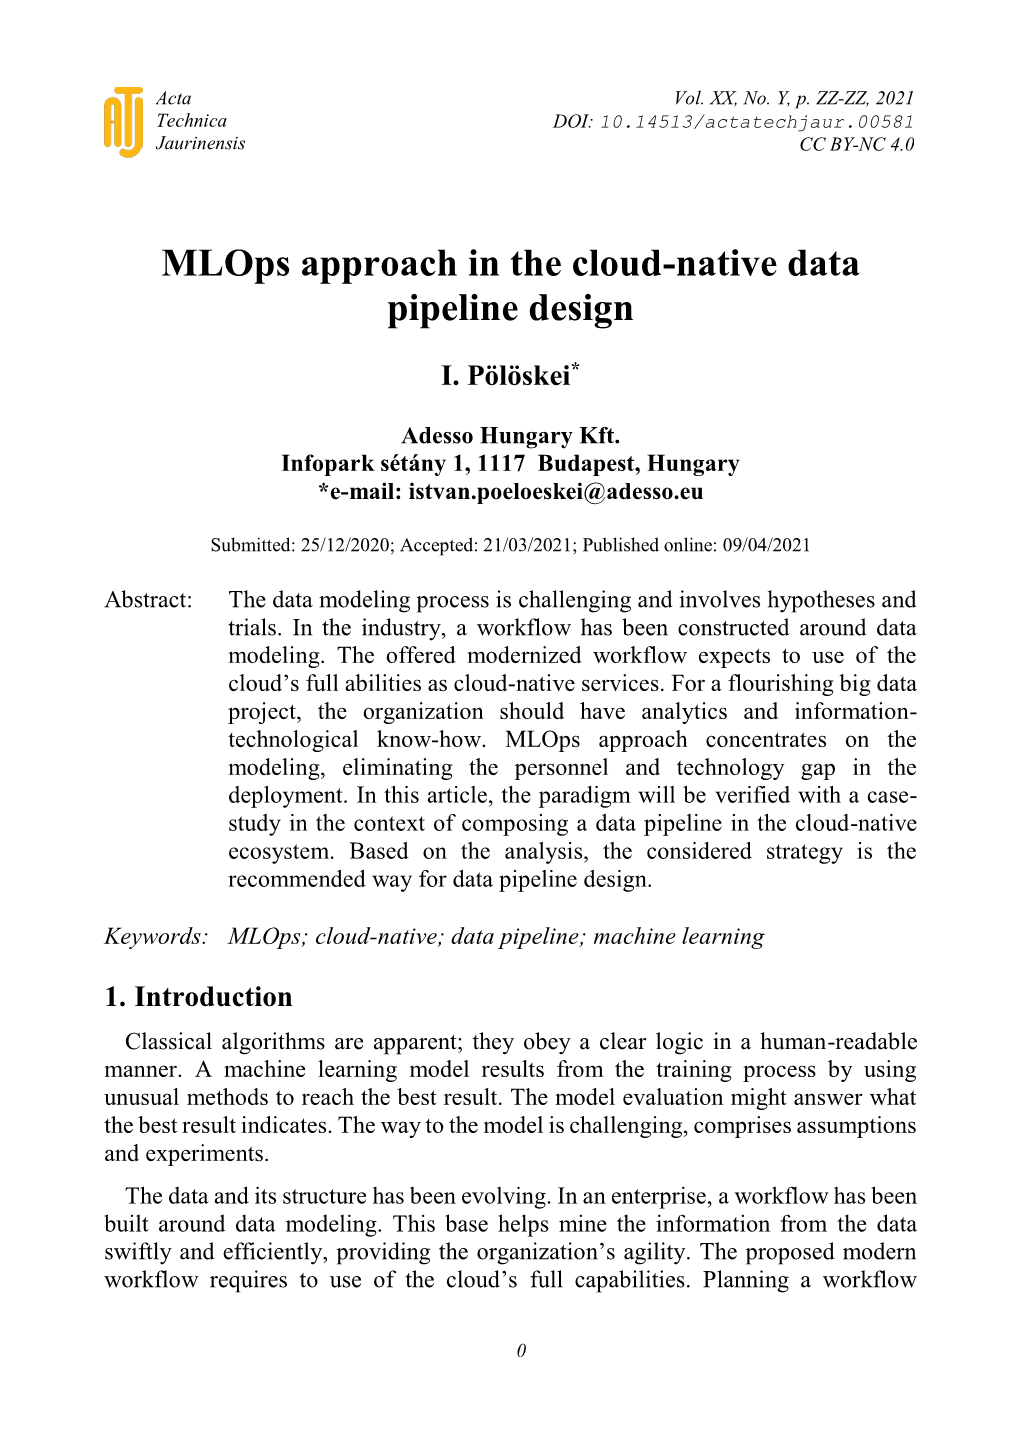 Mlops Approach in the Cloud-Native Data Pipeline Design